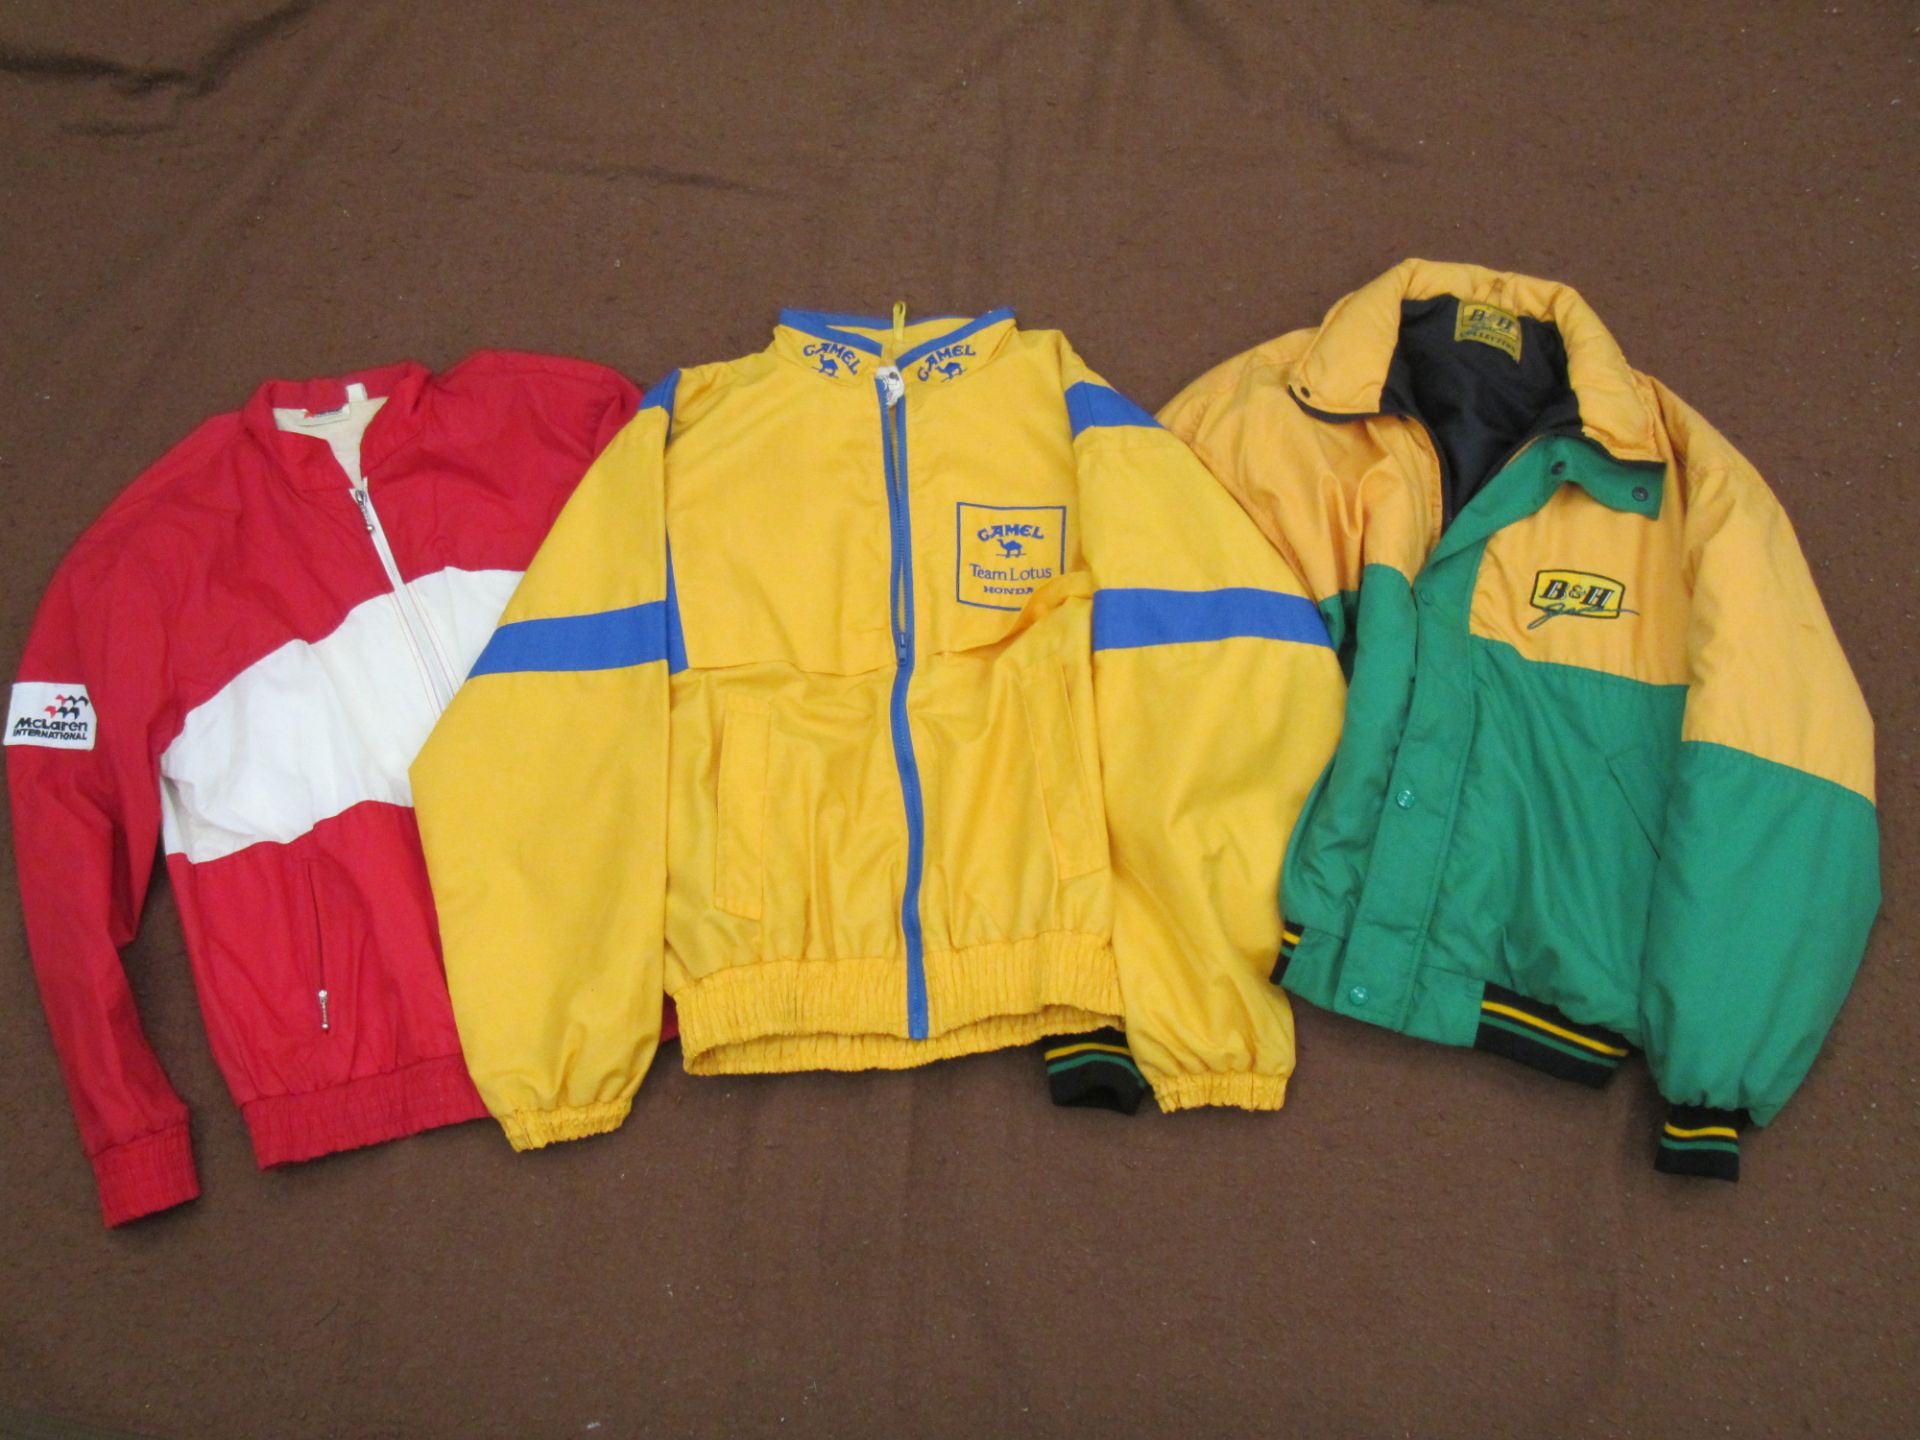 B&H - Jordan, Camel-Team Lotus, Malboro-McLaren, Three F1 team jackets with sponsor logos